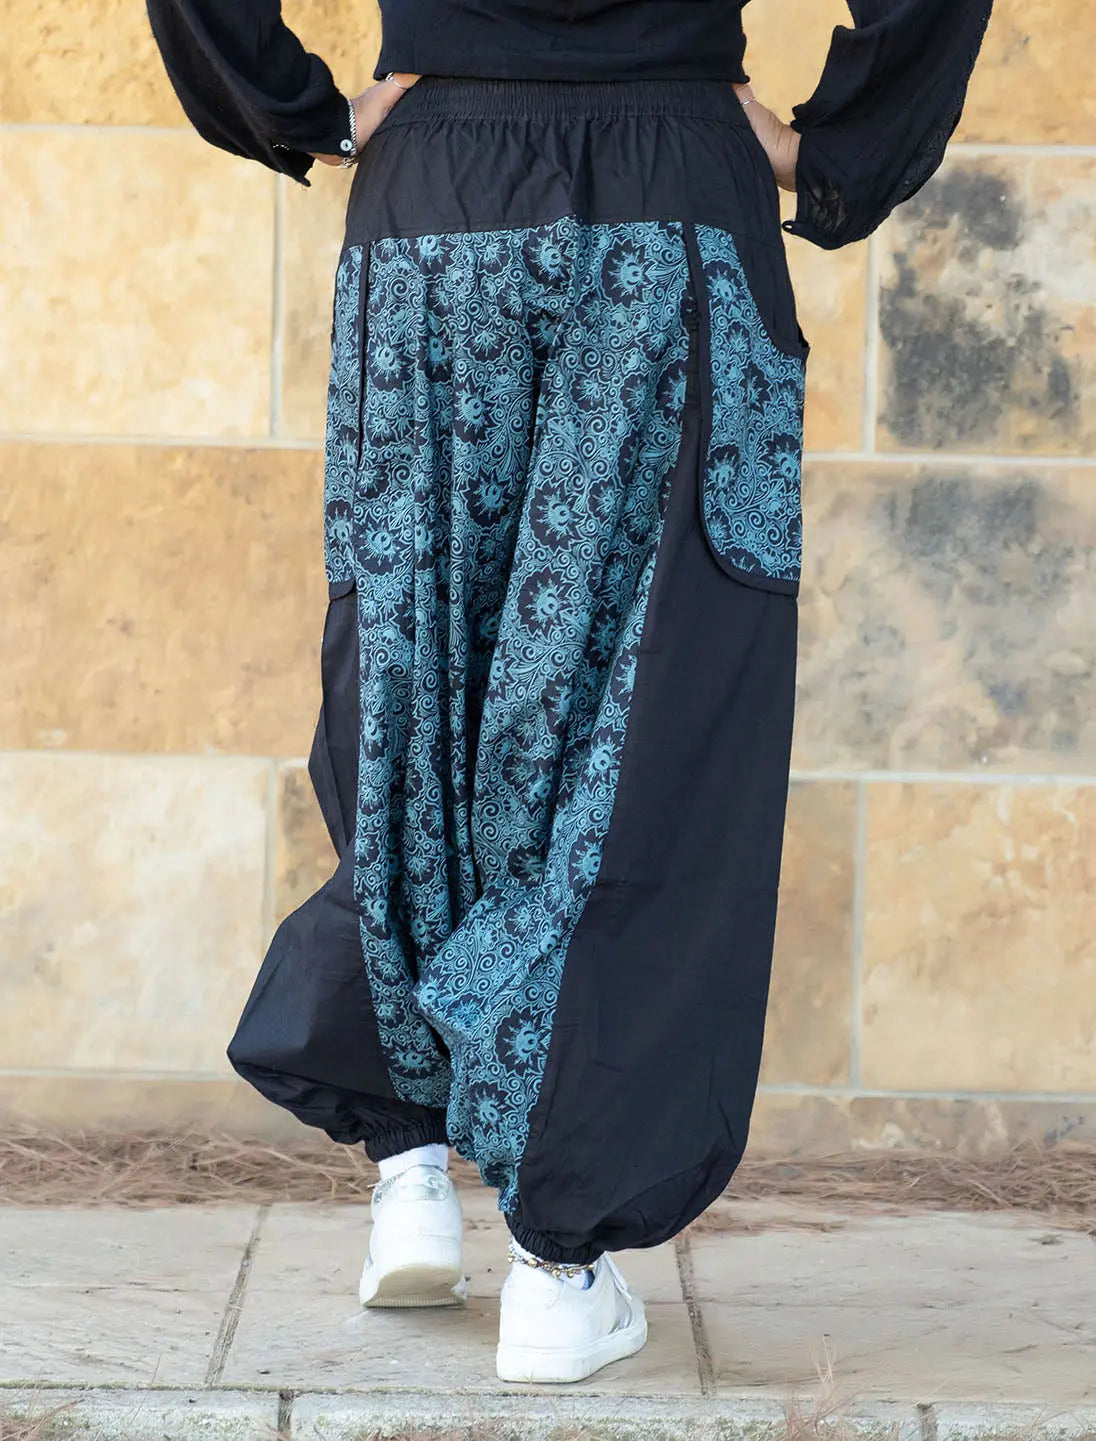 Pantalone donna lungo aladino Maya - Fiore nero blu militare Namastemood